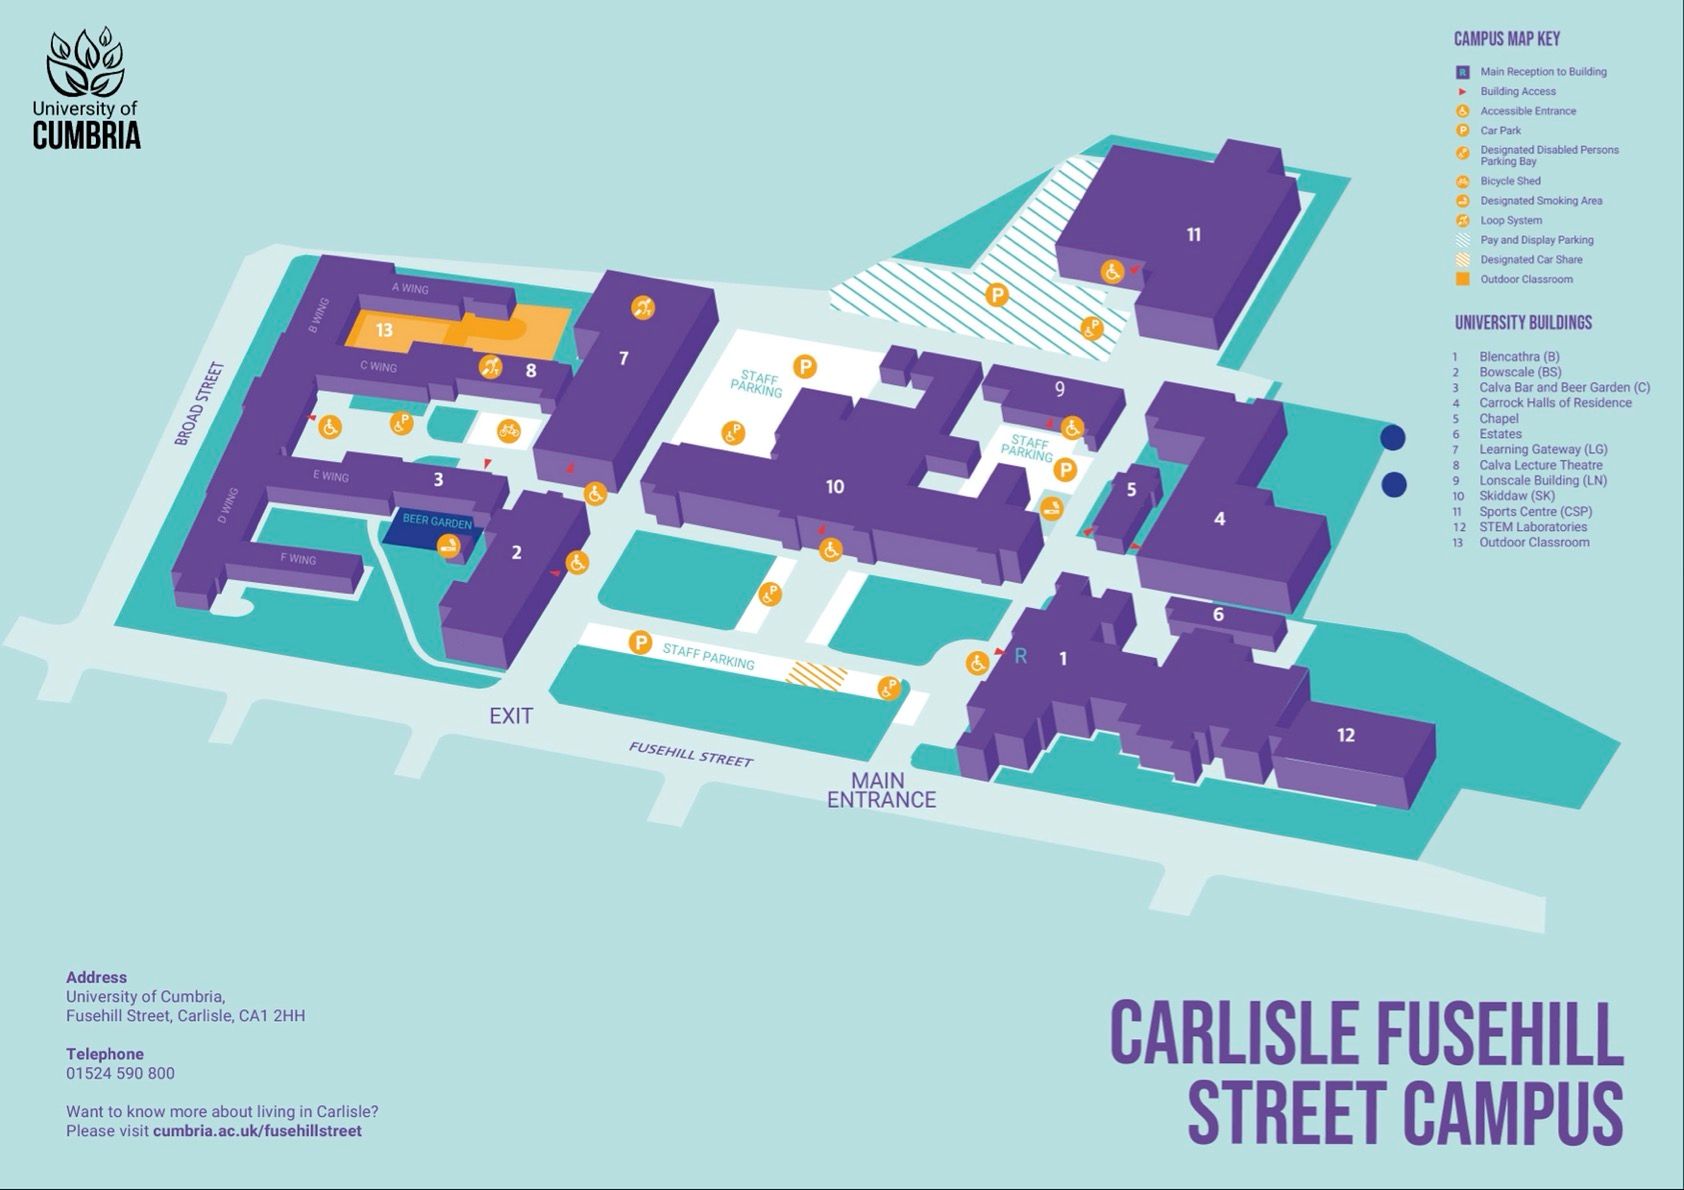 university of cumbria carlisle fusehill street